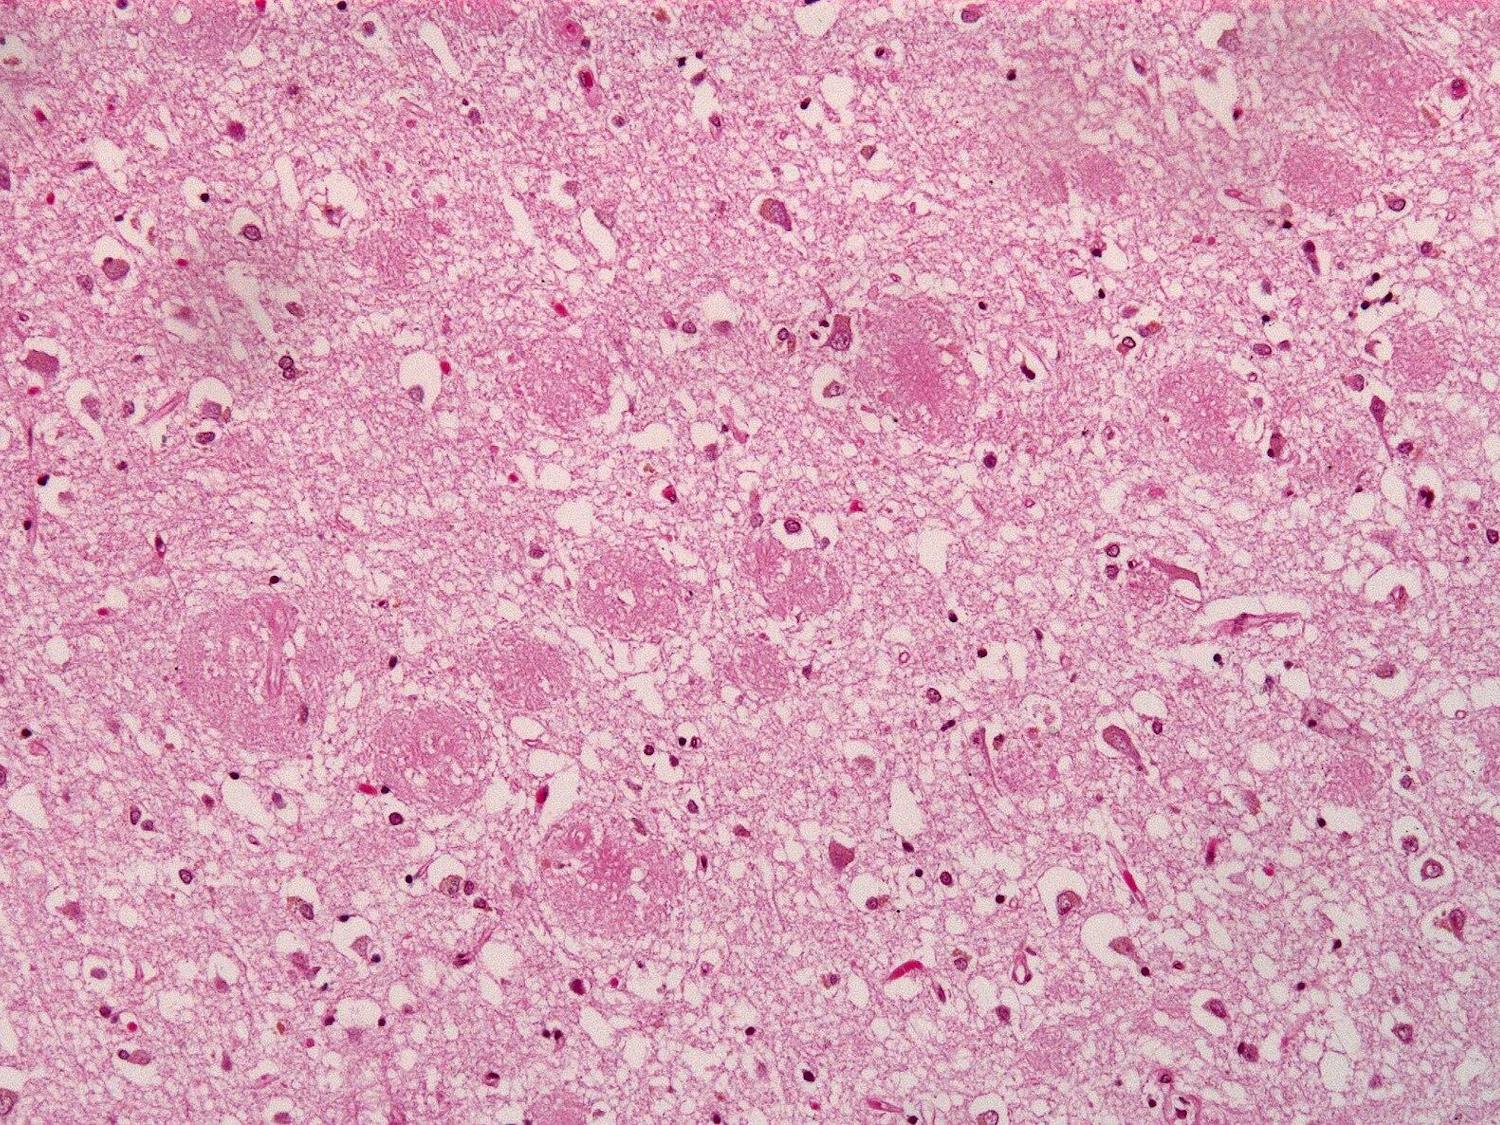 amyloid plaques.jpeg